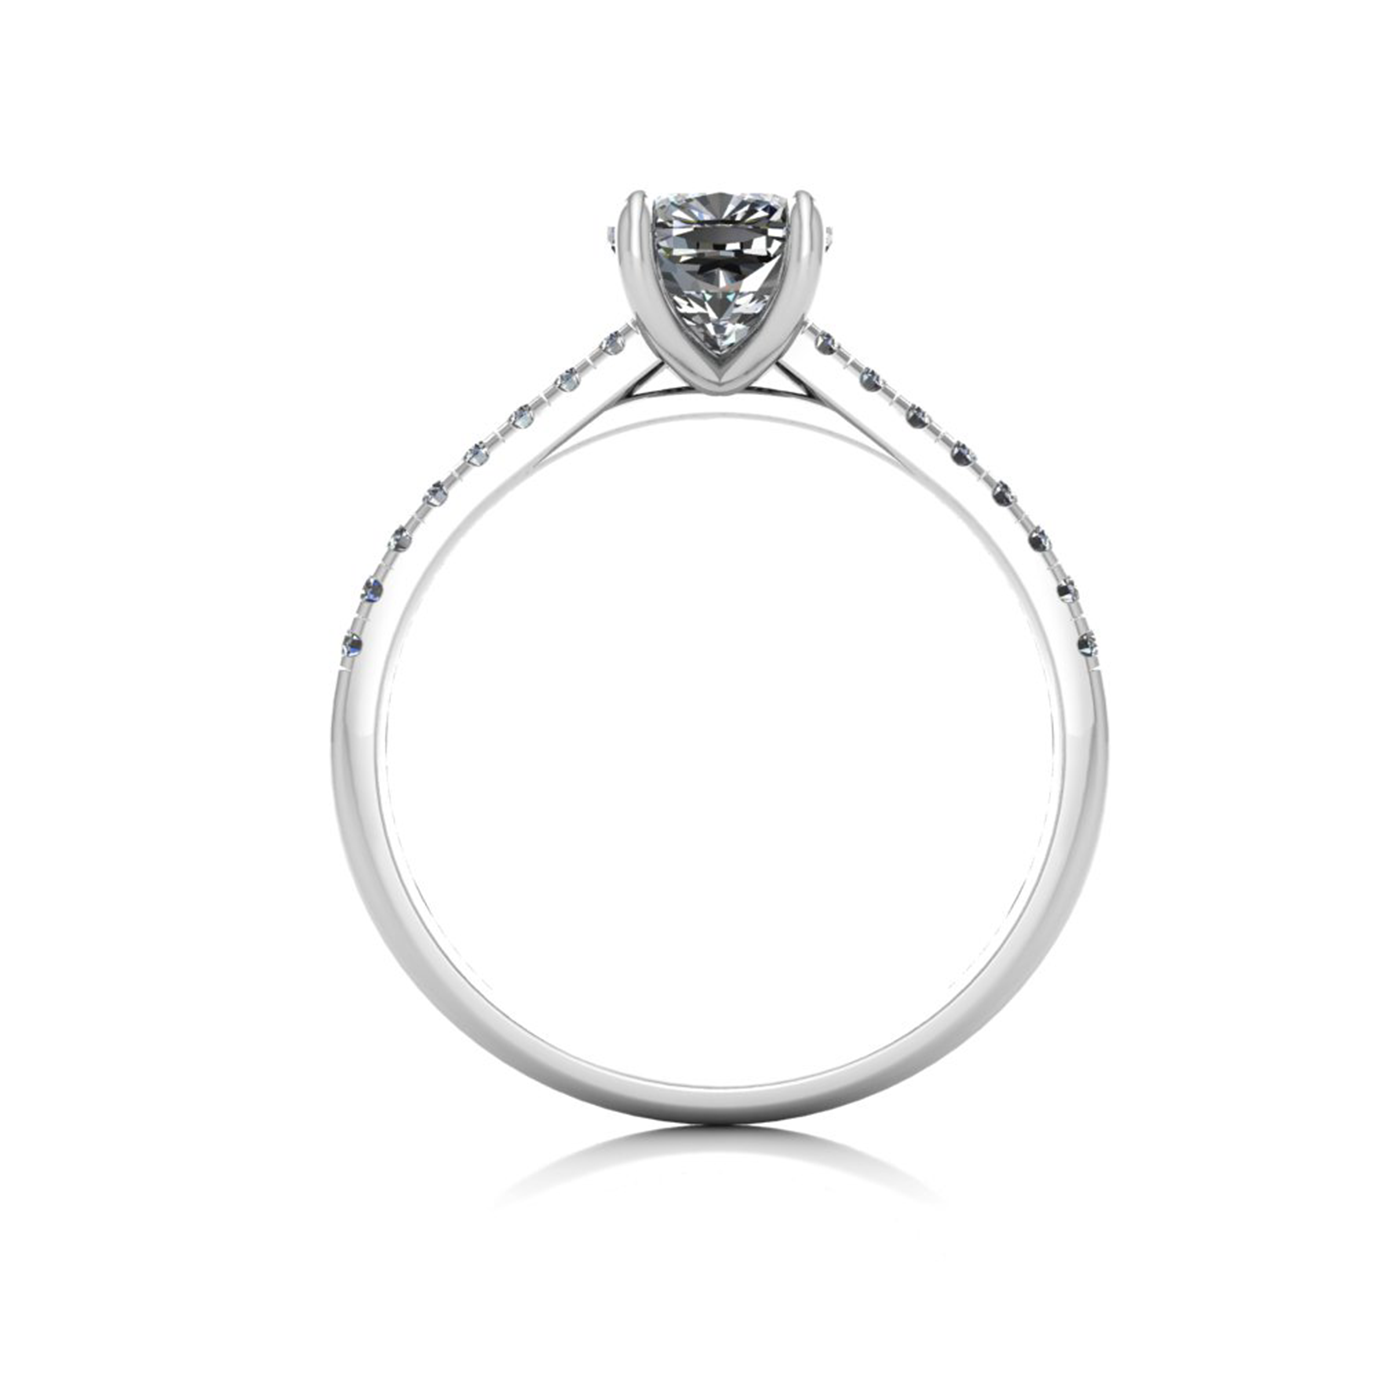 18k white gold 1.0 ct 4 prongs cushion cut diamond engagement ring with whisper thin pavÉ set band